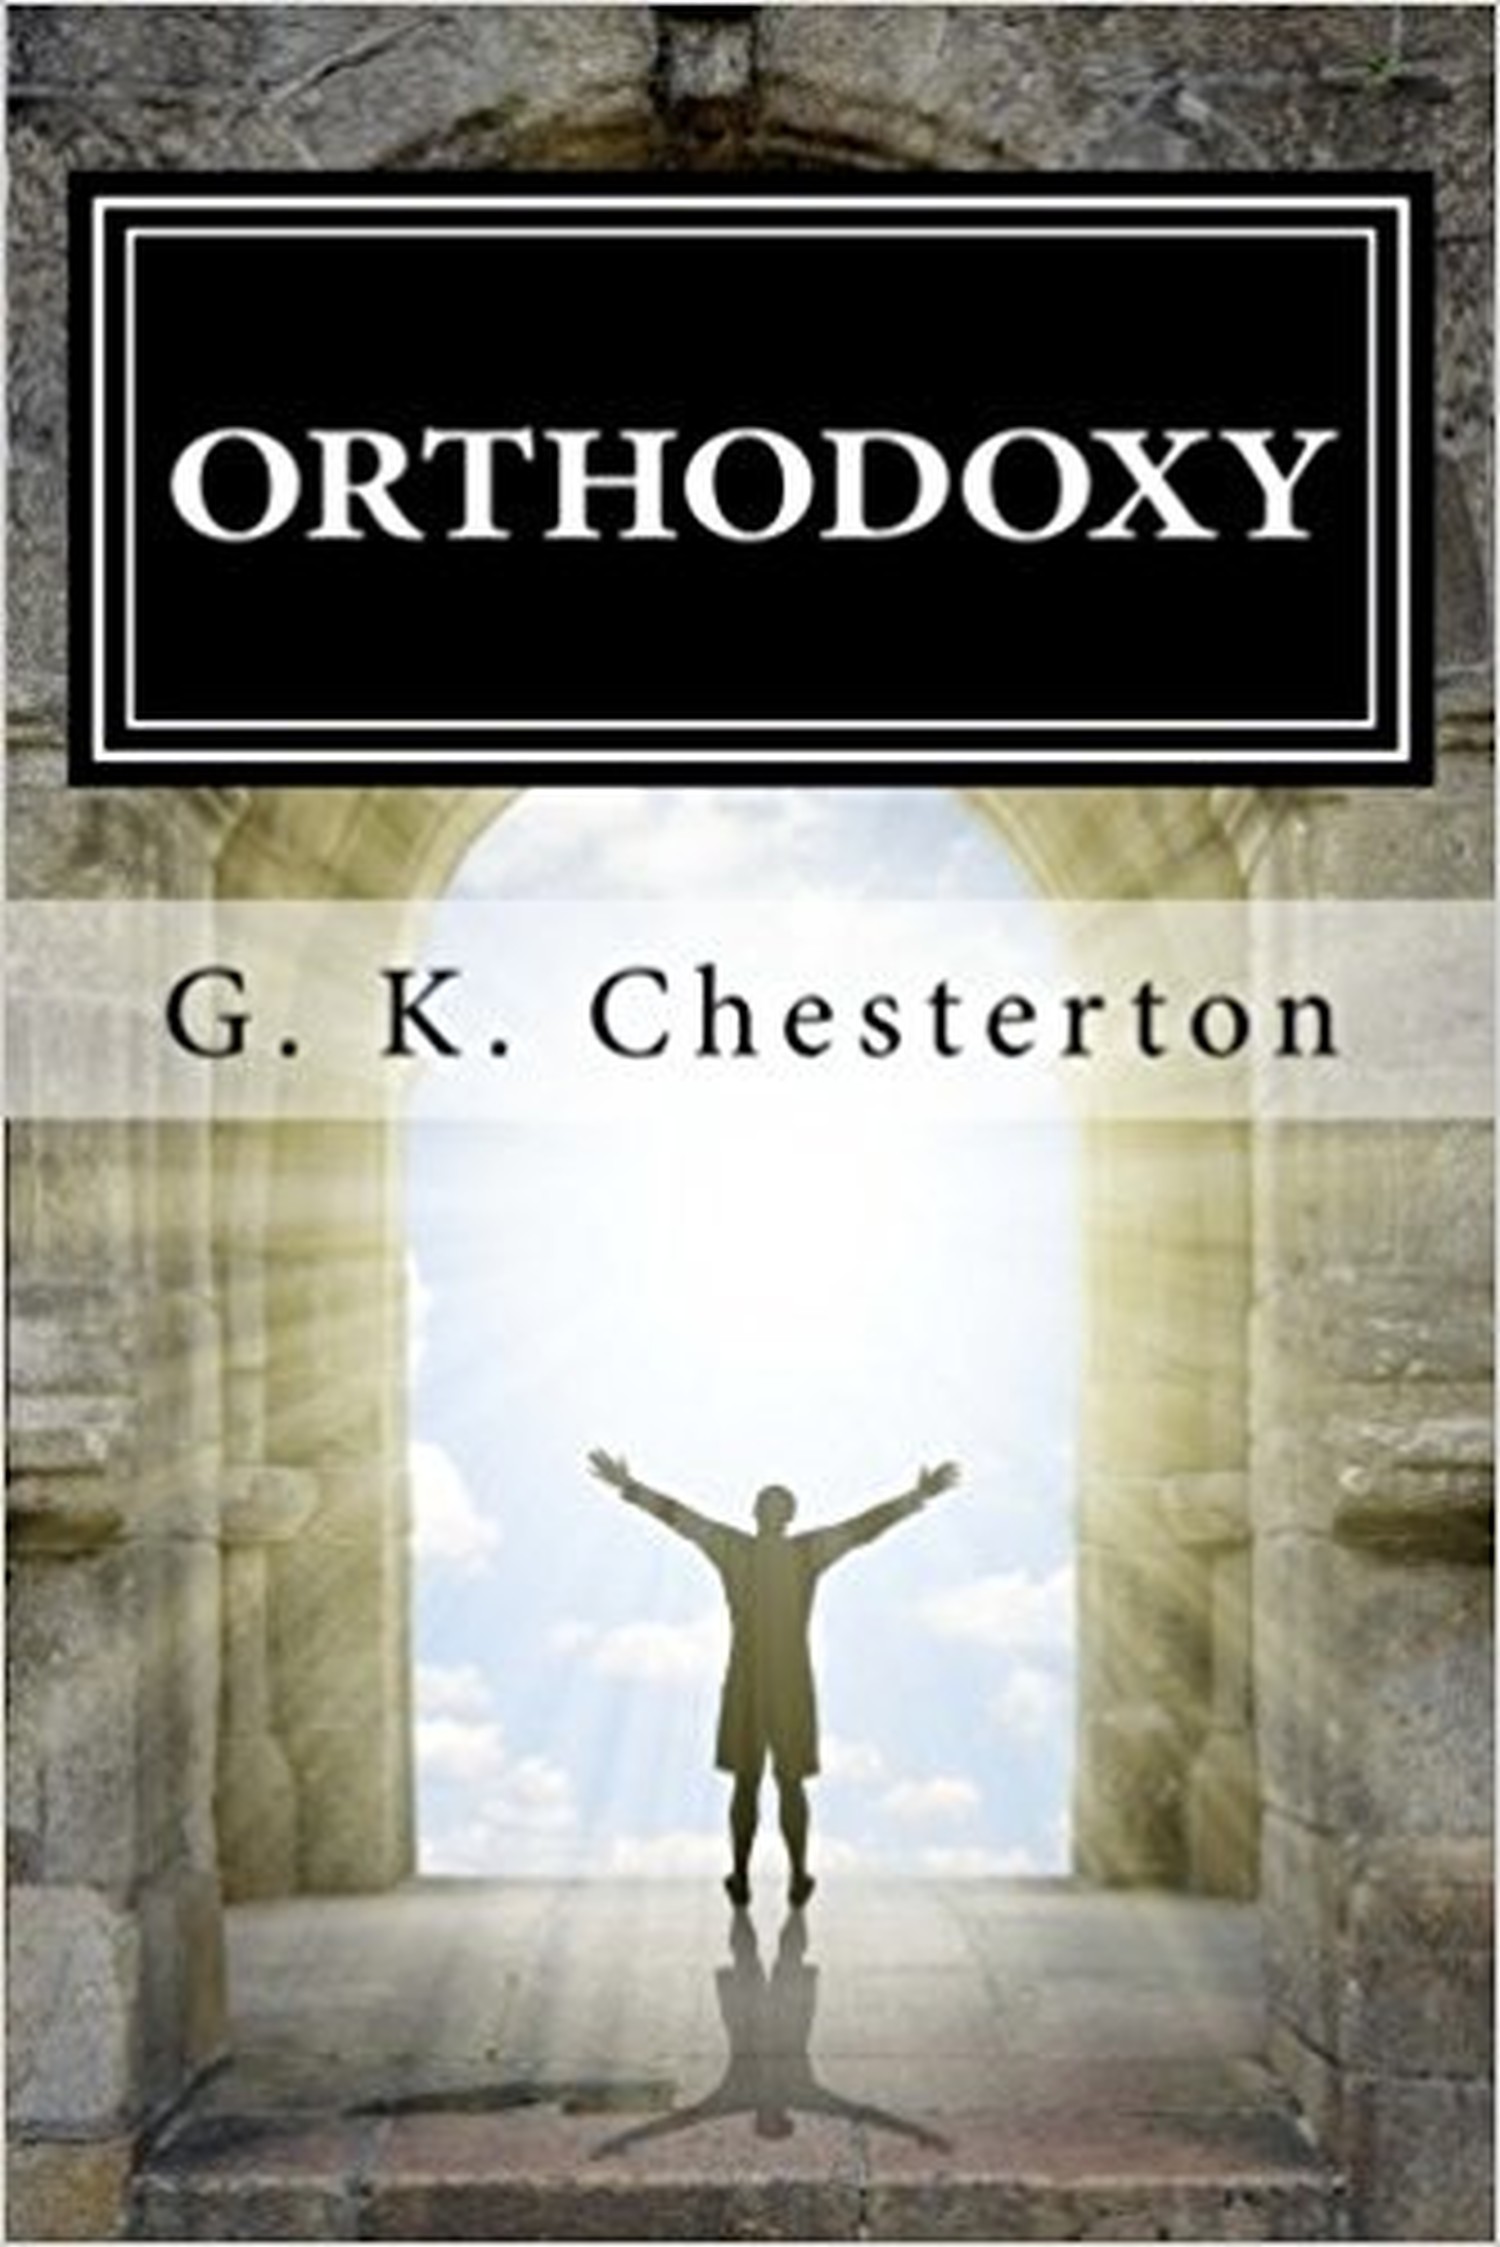 Chesterton-orthodoxyCover.jpg